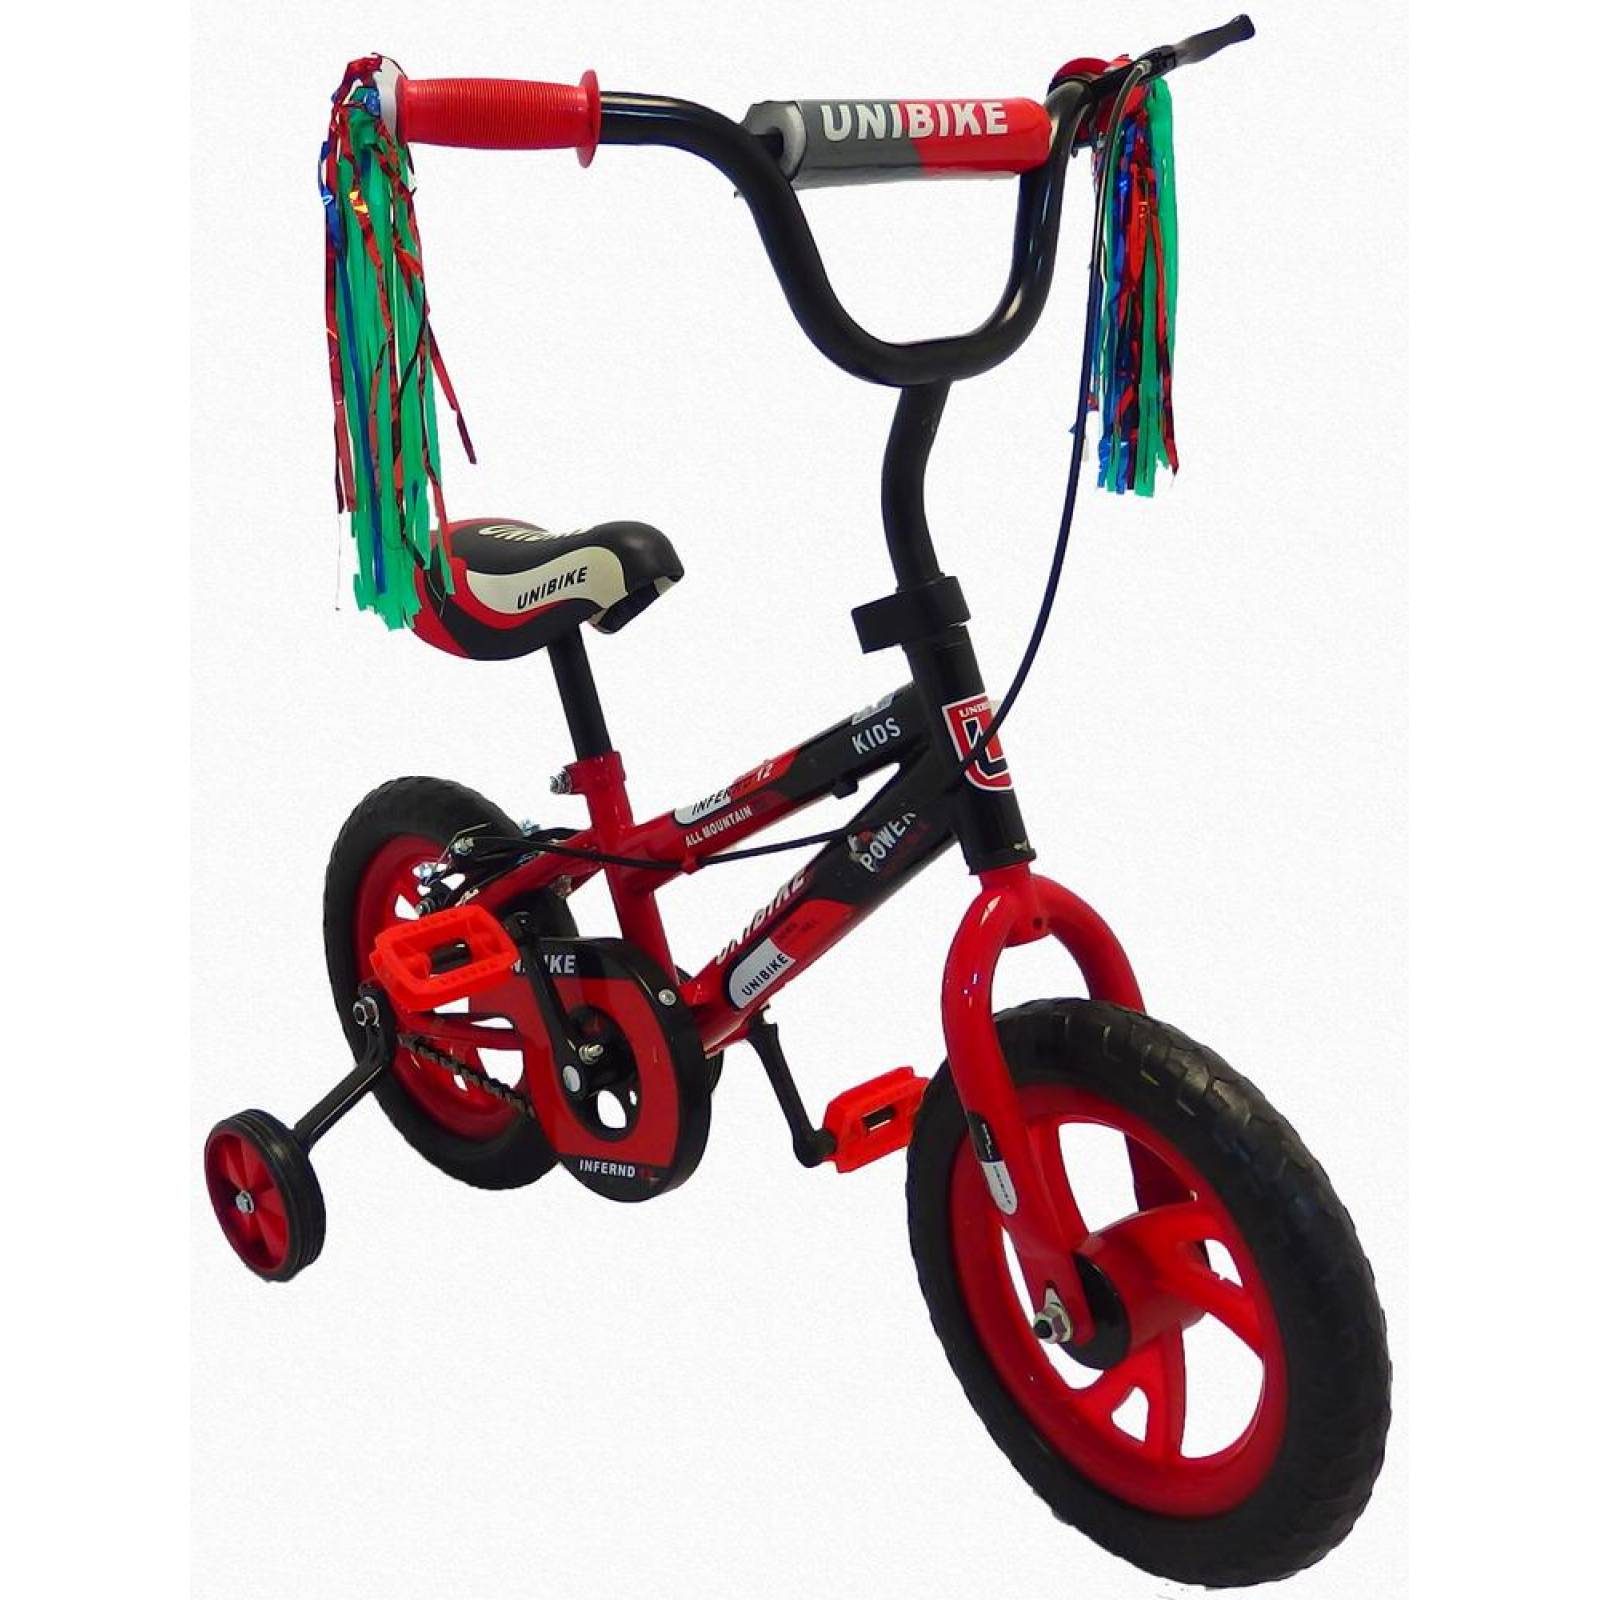 Bicicleta Infantil para niño Rodada 12 con llanta de goma Negro-Rojo 